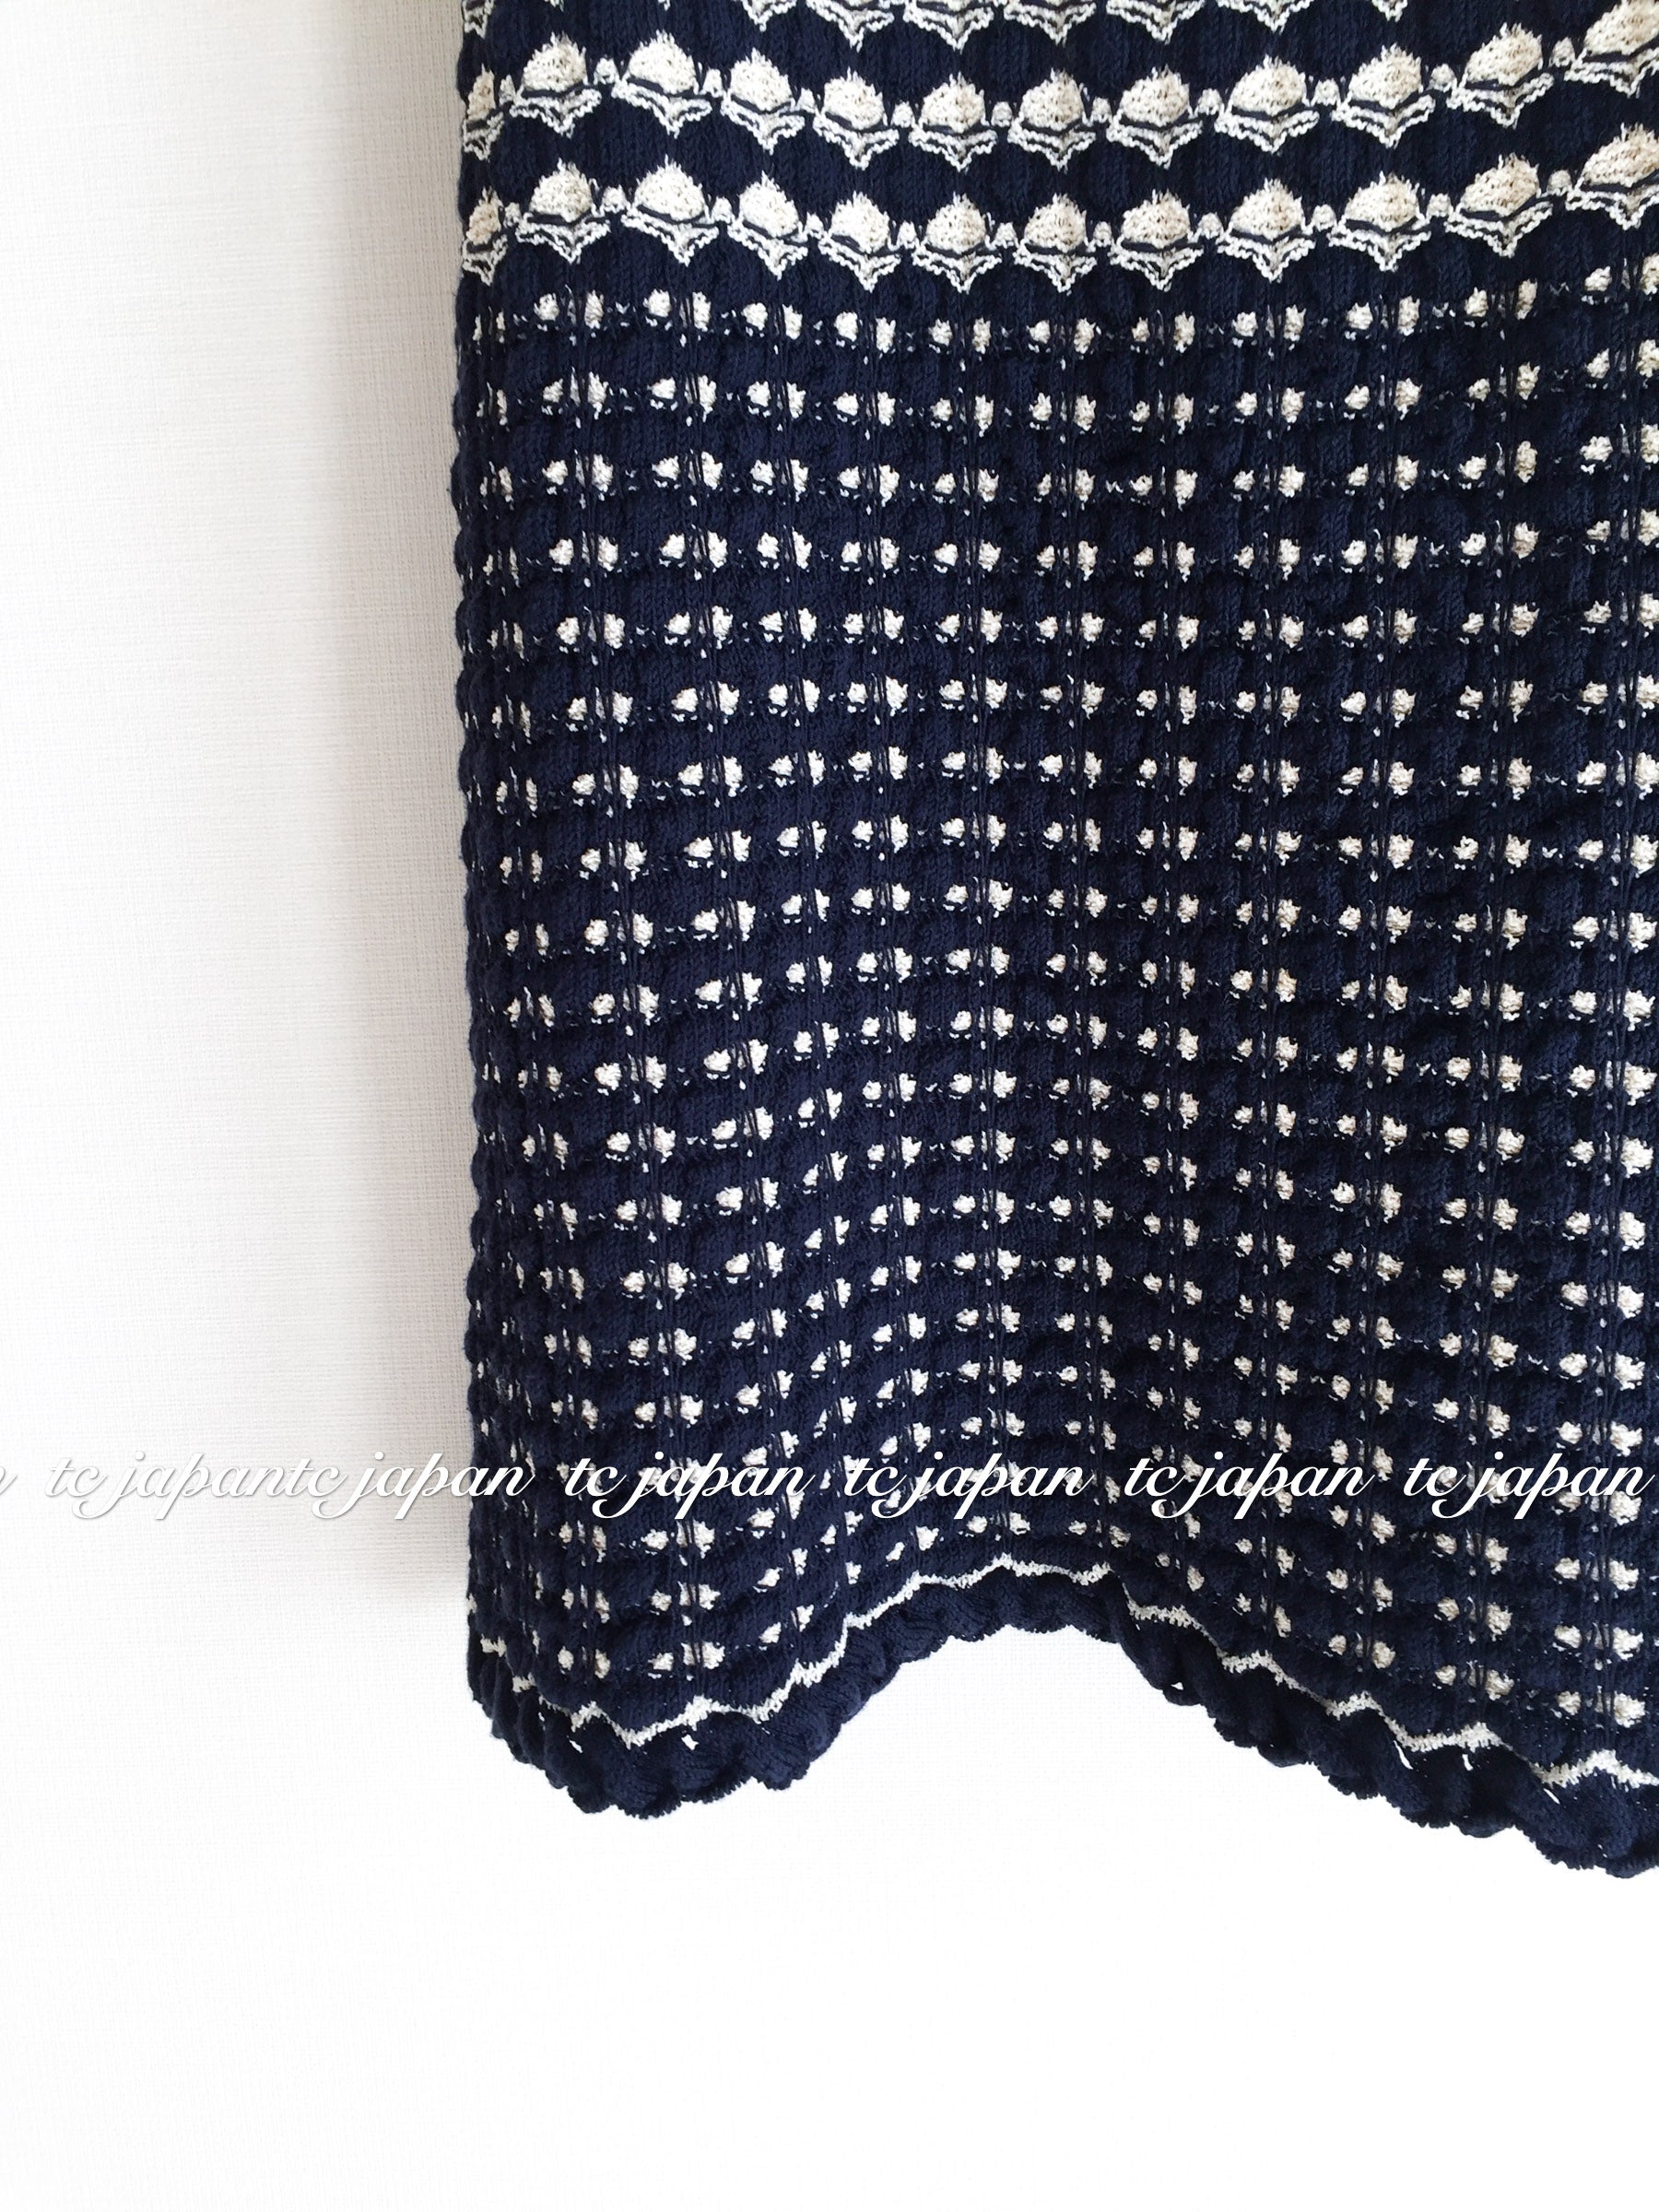 CHANEL 12S Beige Navy Mix Tweed Knit Dress Cardigan 38 40 シャネル ベージュ ネイビー ミックス ツイード ニット ワンピース カーディガン 即発